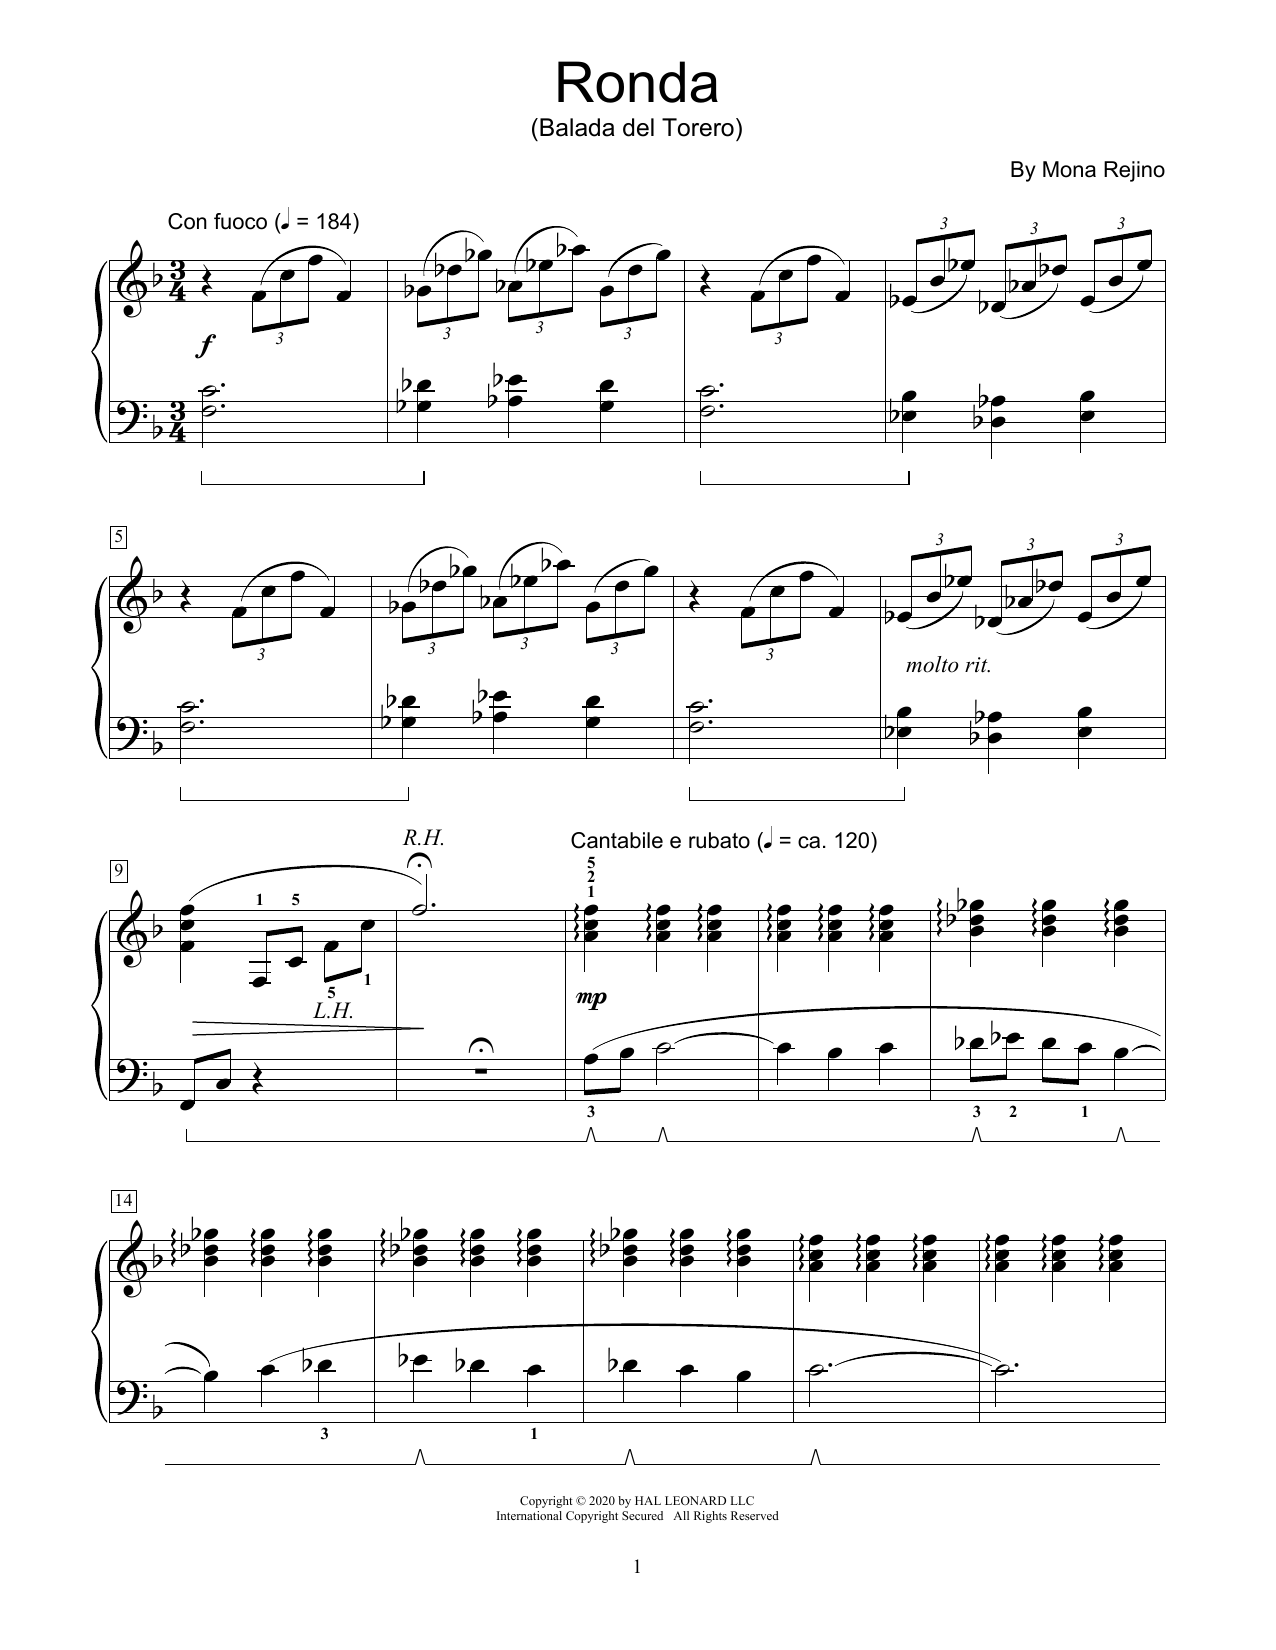 Download Mona Rejino Ronda (Balada Del Torero) Sheet Music and learn how to play Educational Piano PDF digital score in minutes